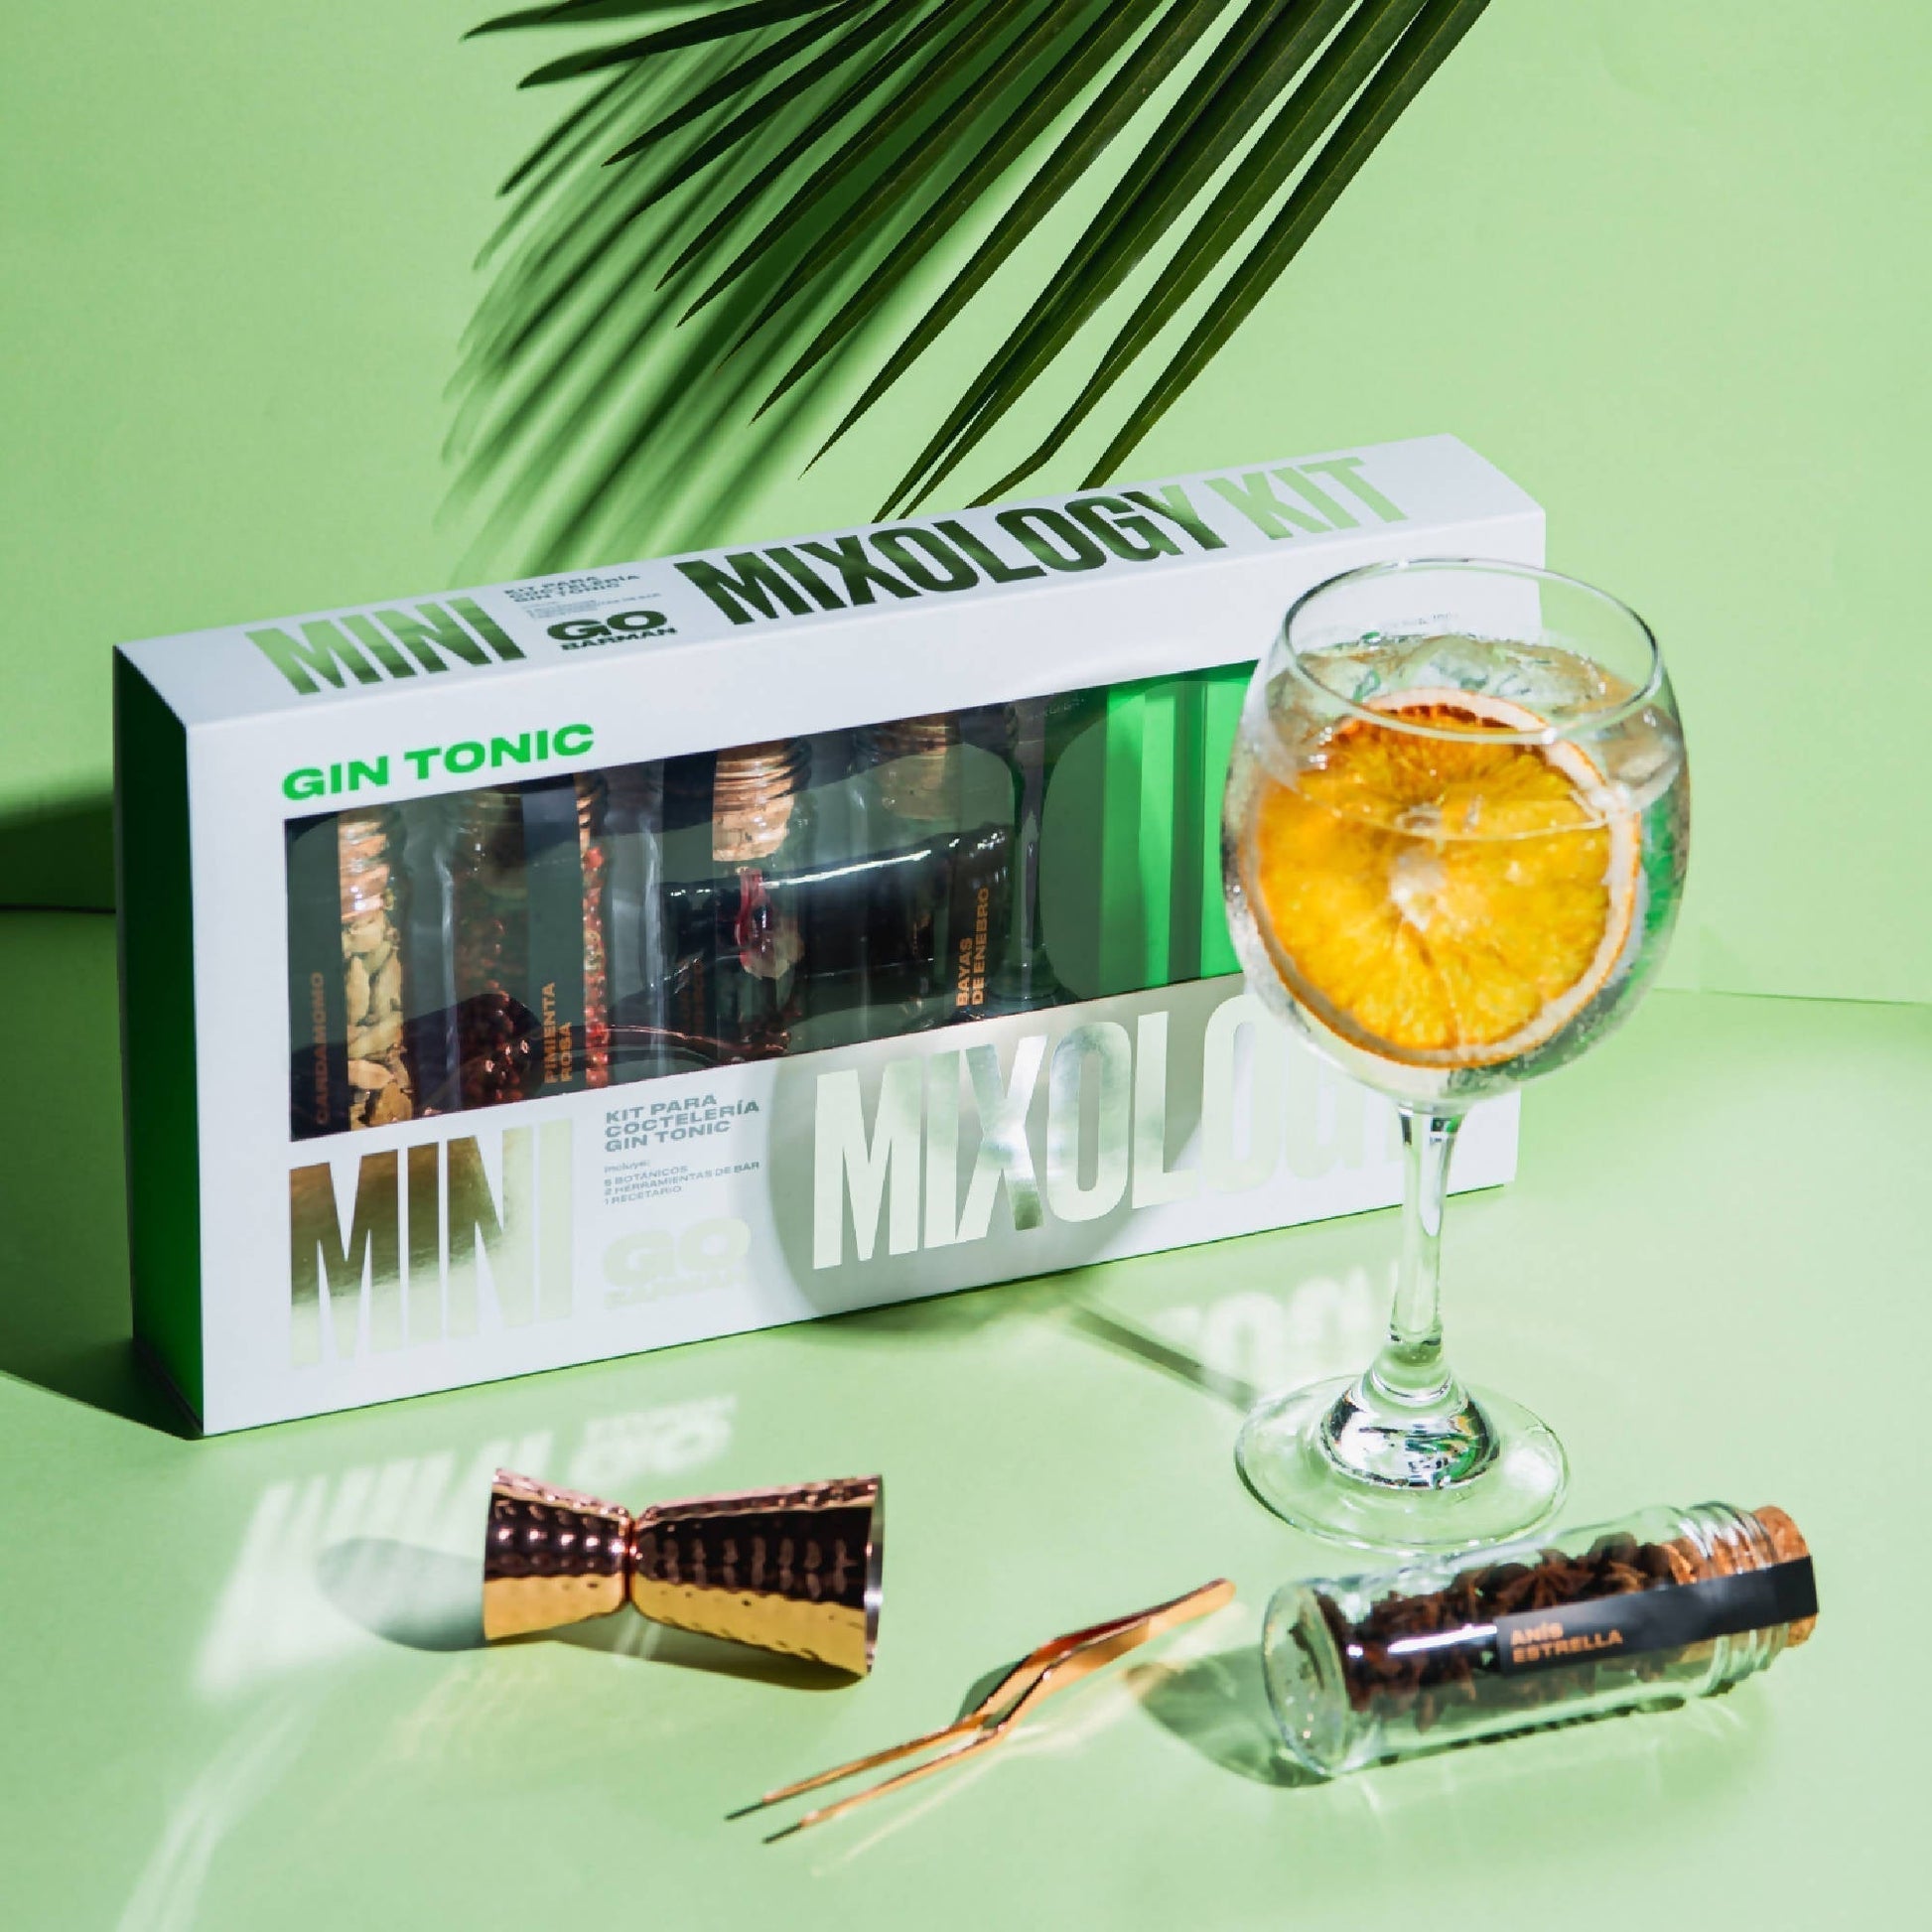 Mini Mixology Kit Gin Tonic Grab&Go Go Barman3#Sin color